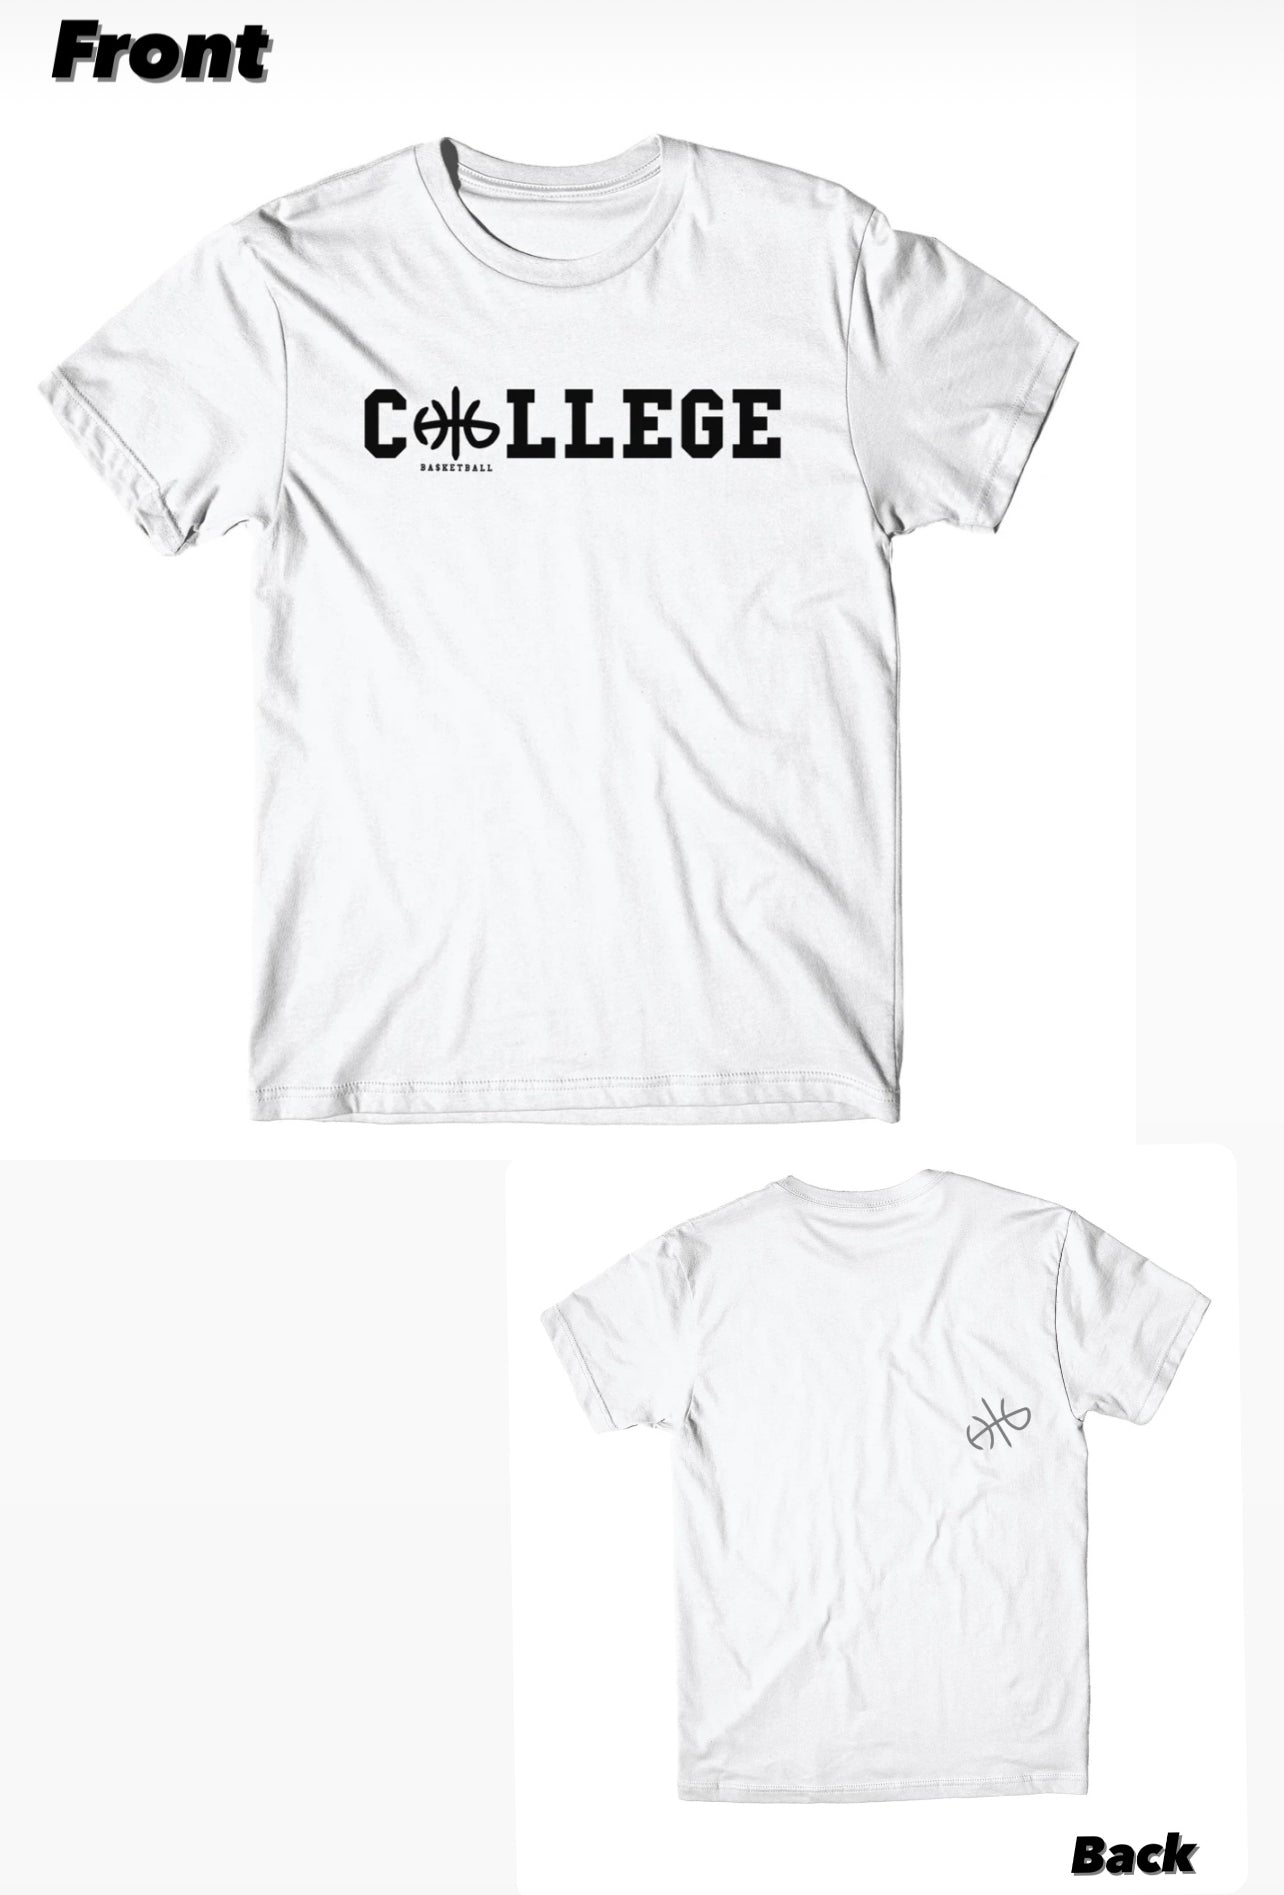 HtG "COLLEGE" Crew T Shirt